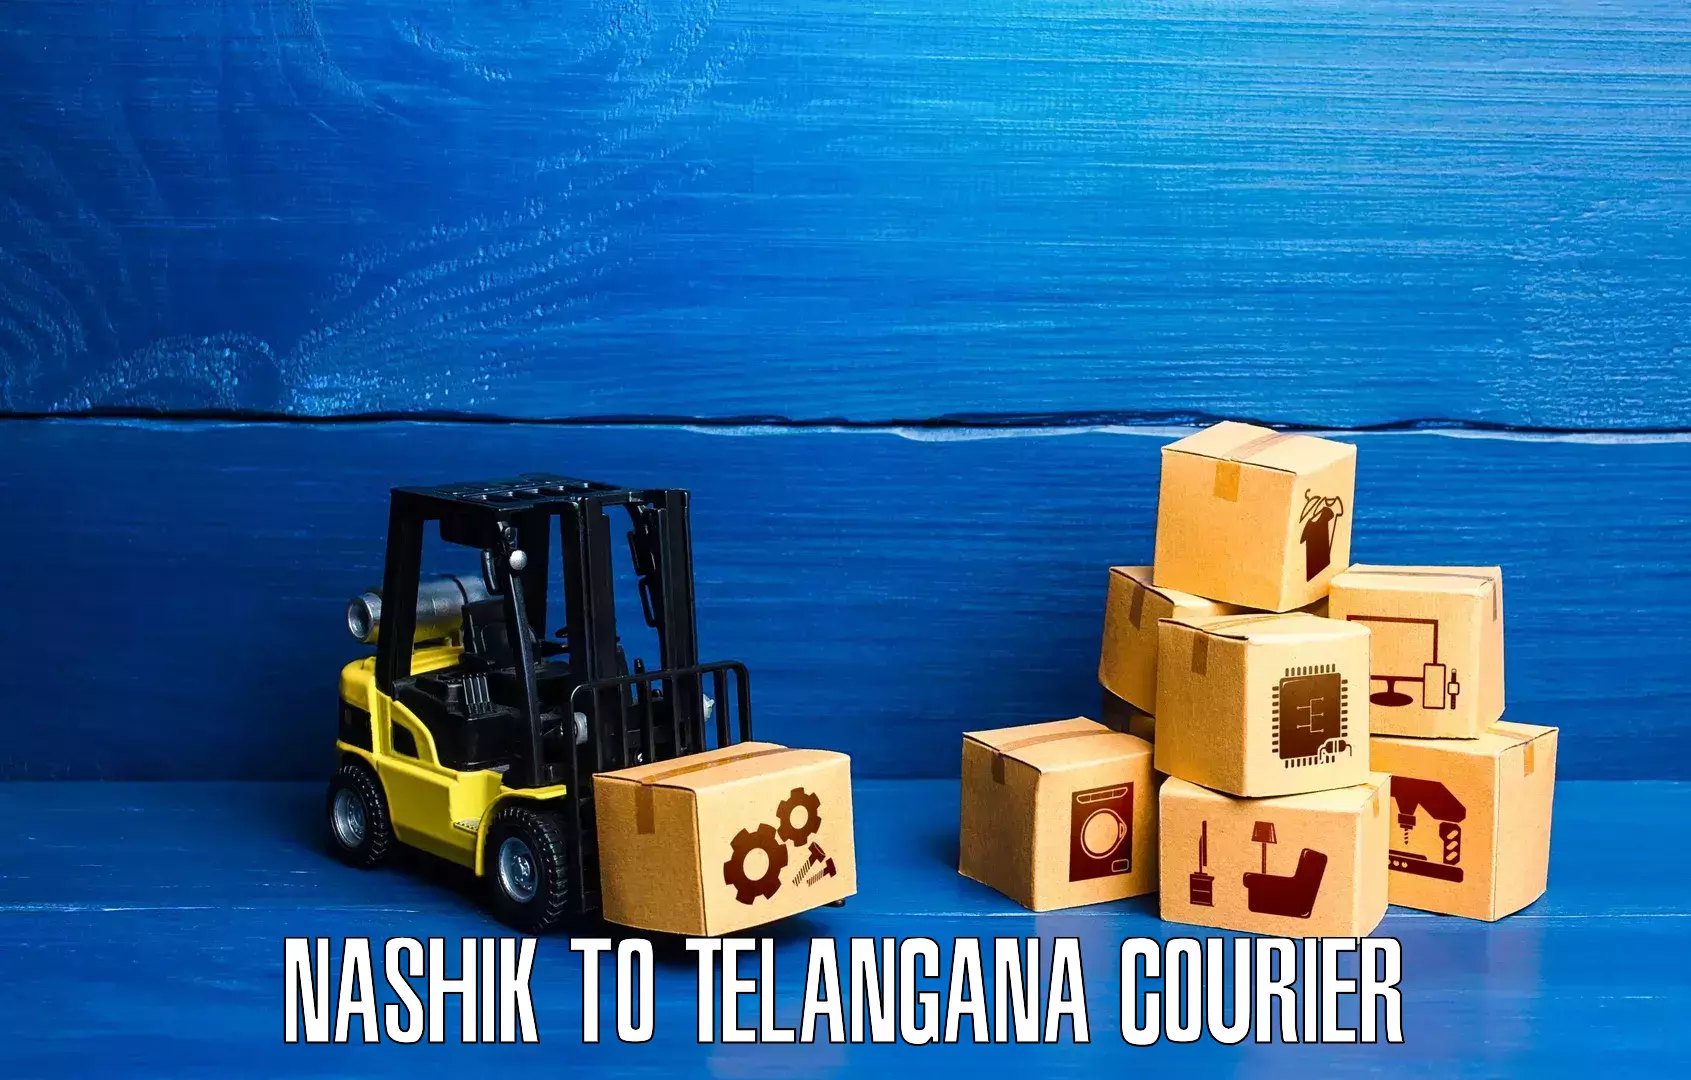 Courier service innovation Nashik to Kothur